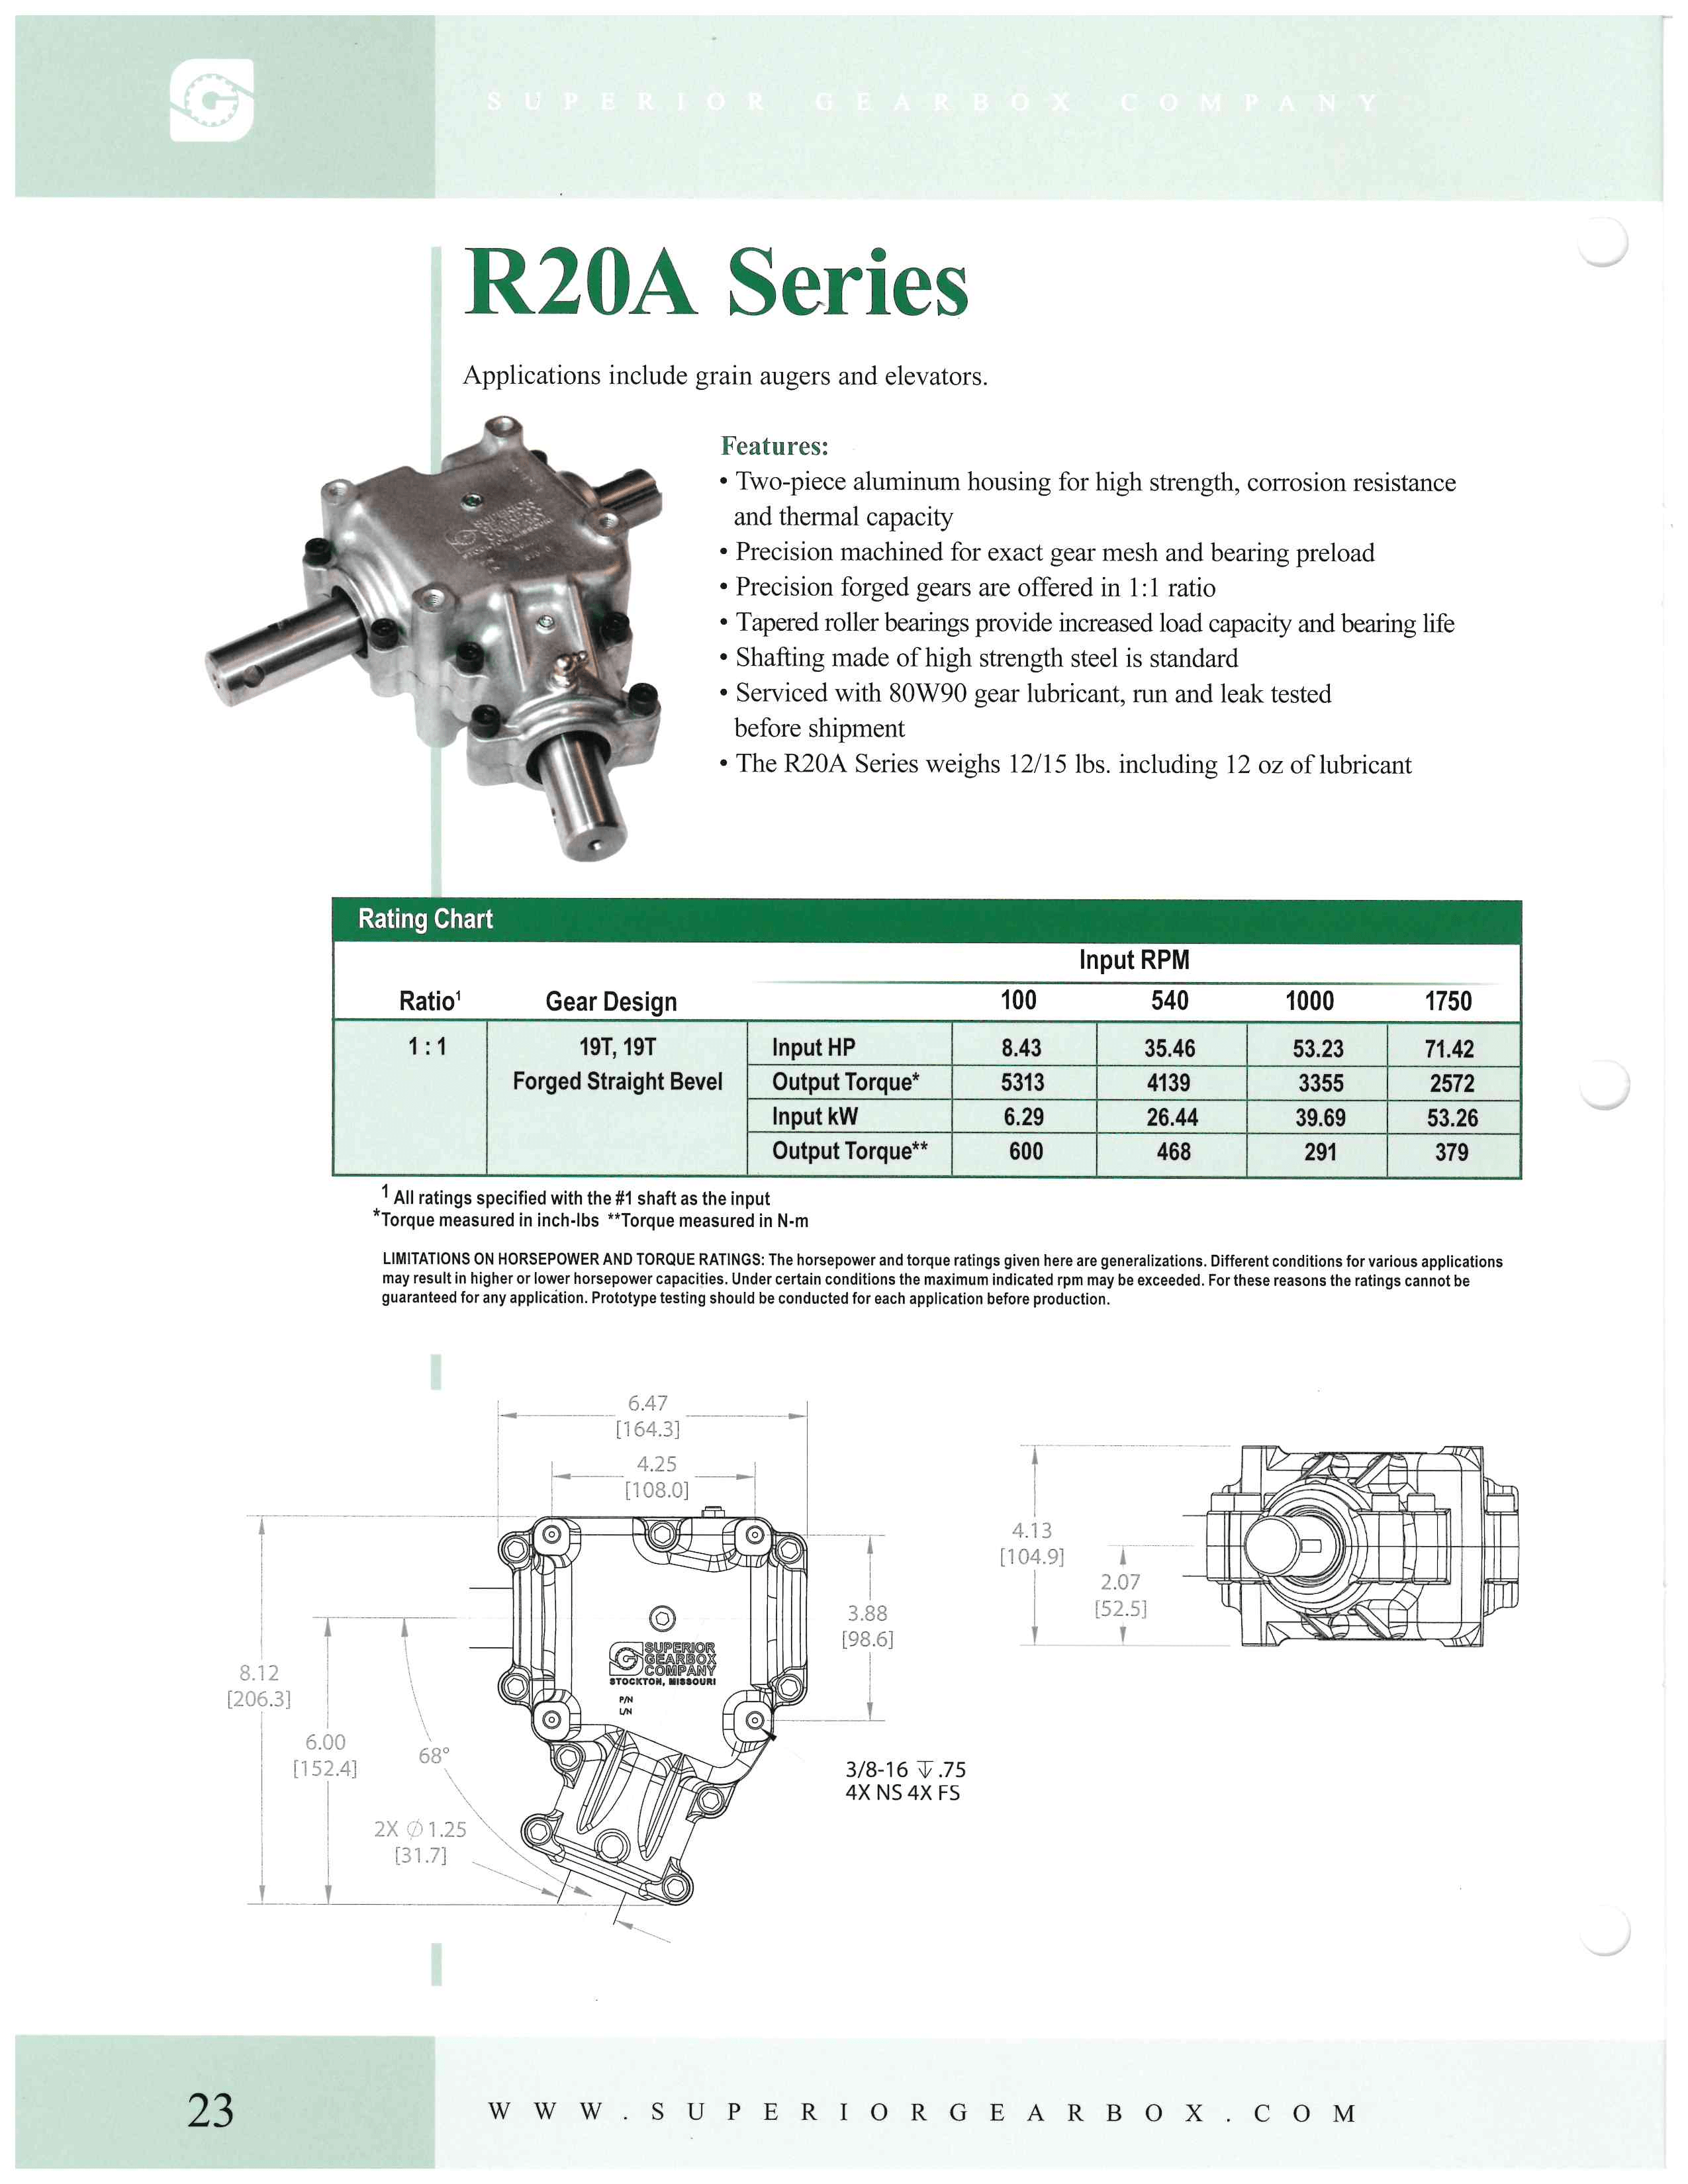 R20A Series Brochure Image